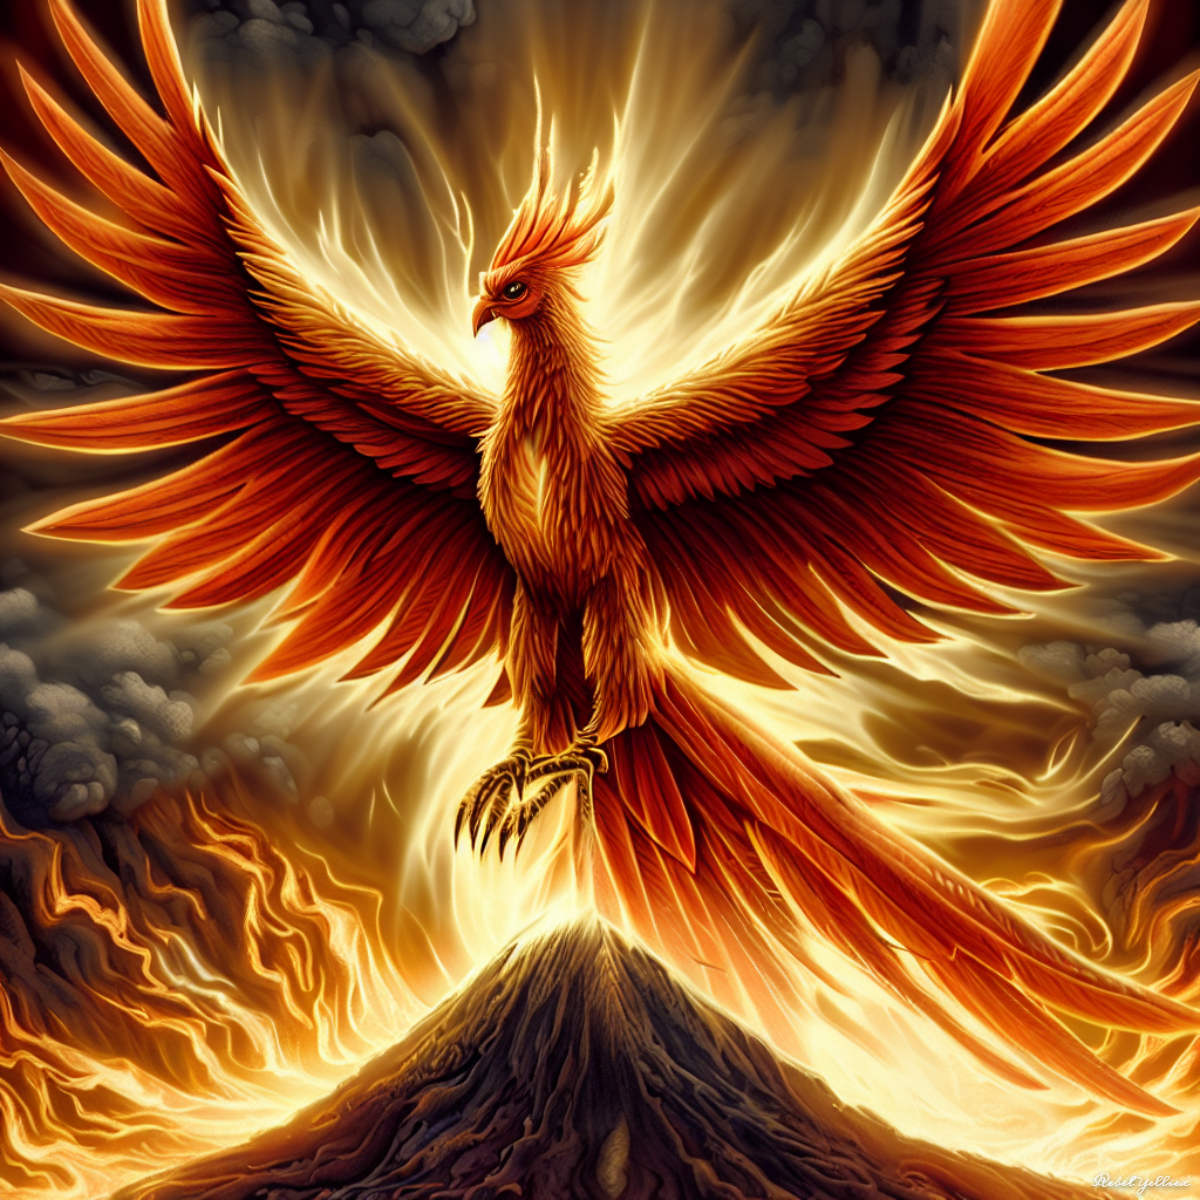 A majestic Phoenix bird rising by xRebelYellx on DeviantArt